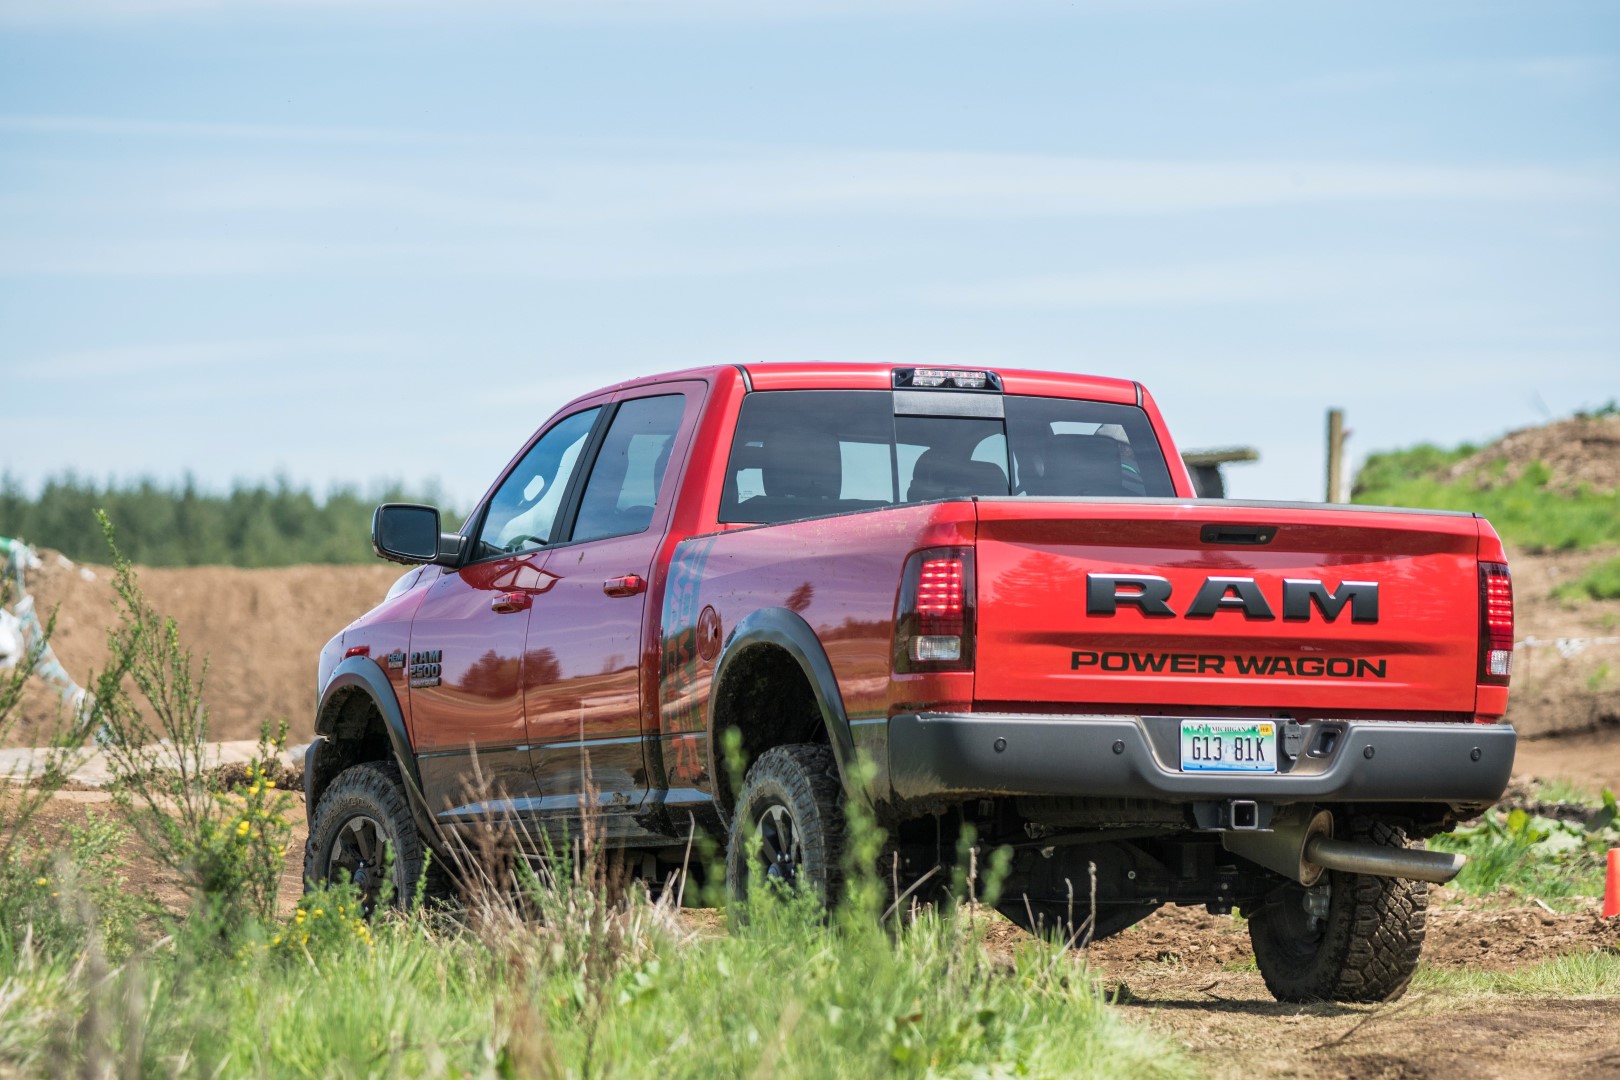 RAM Power Wagon in the dirt